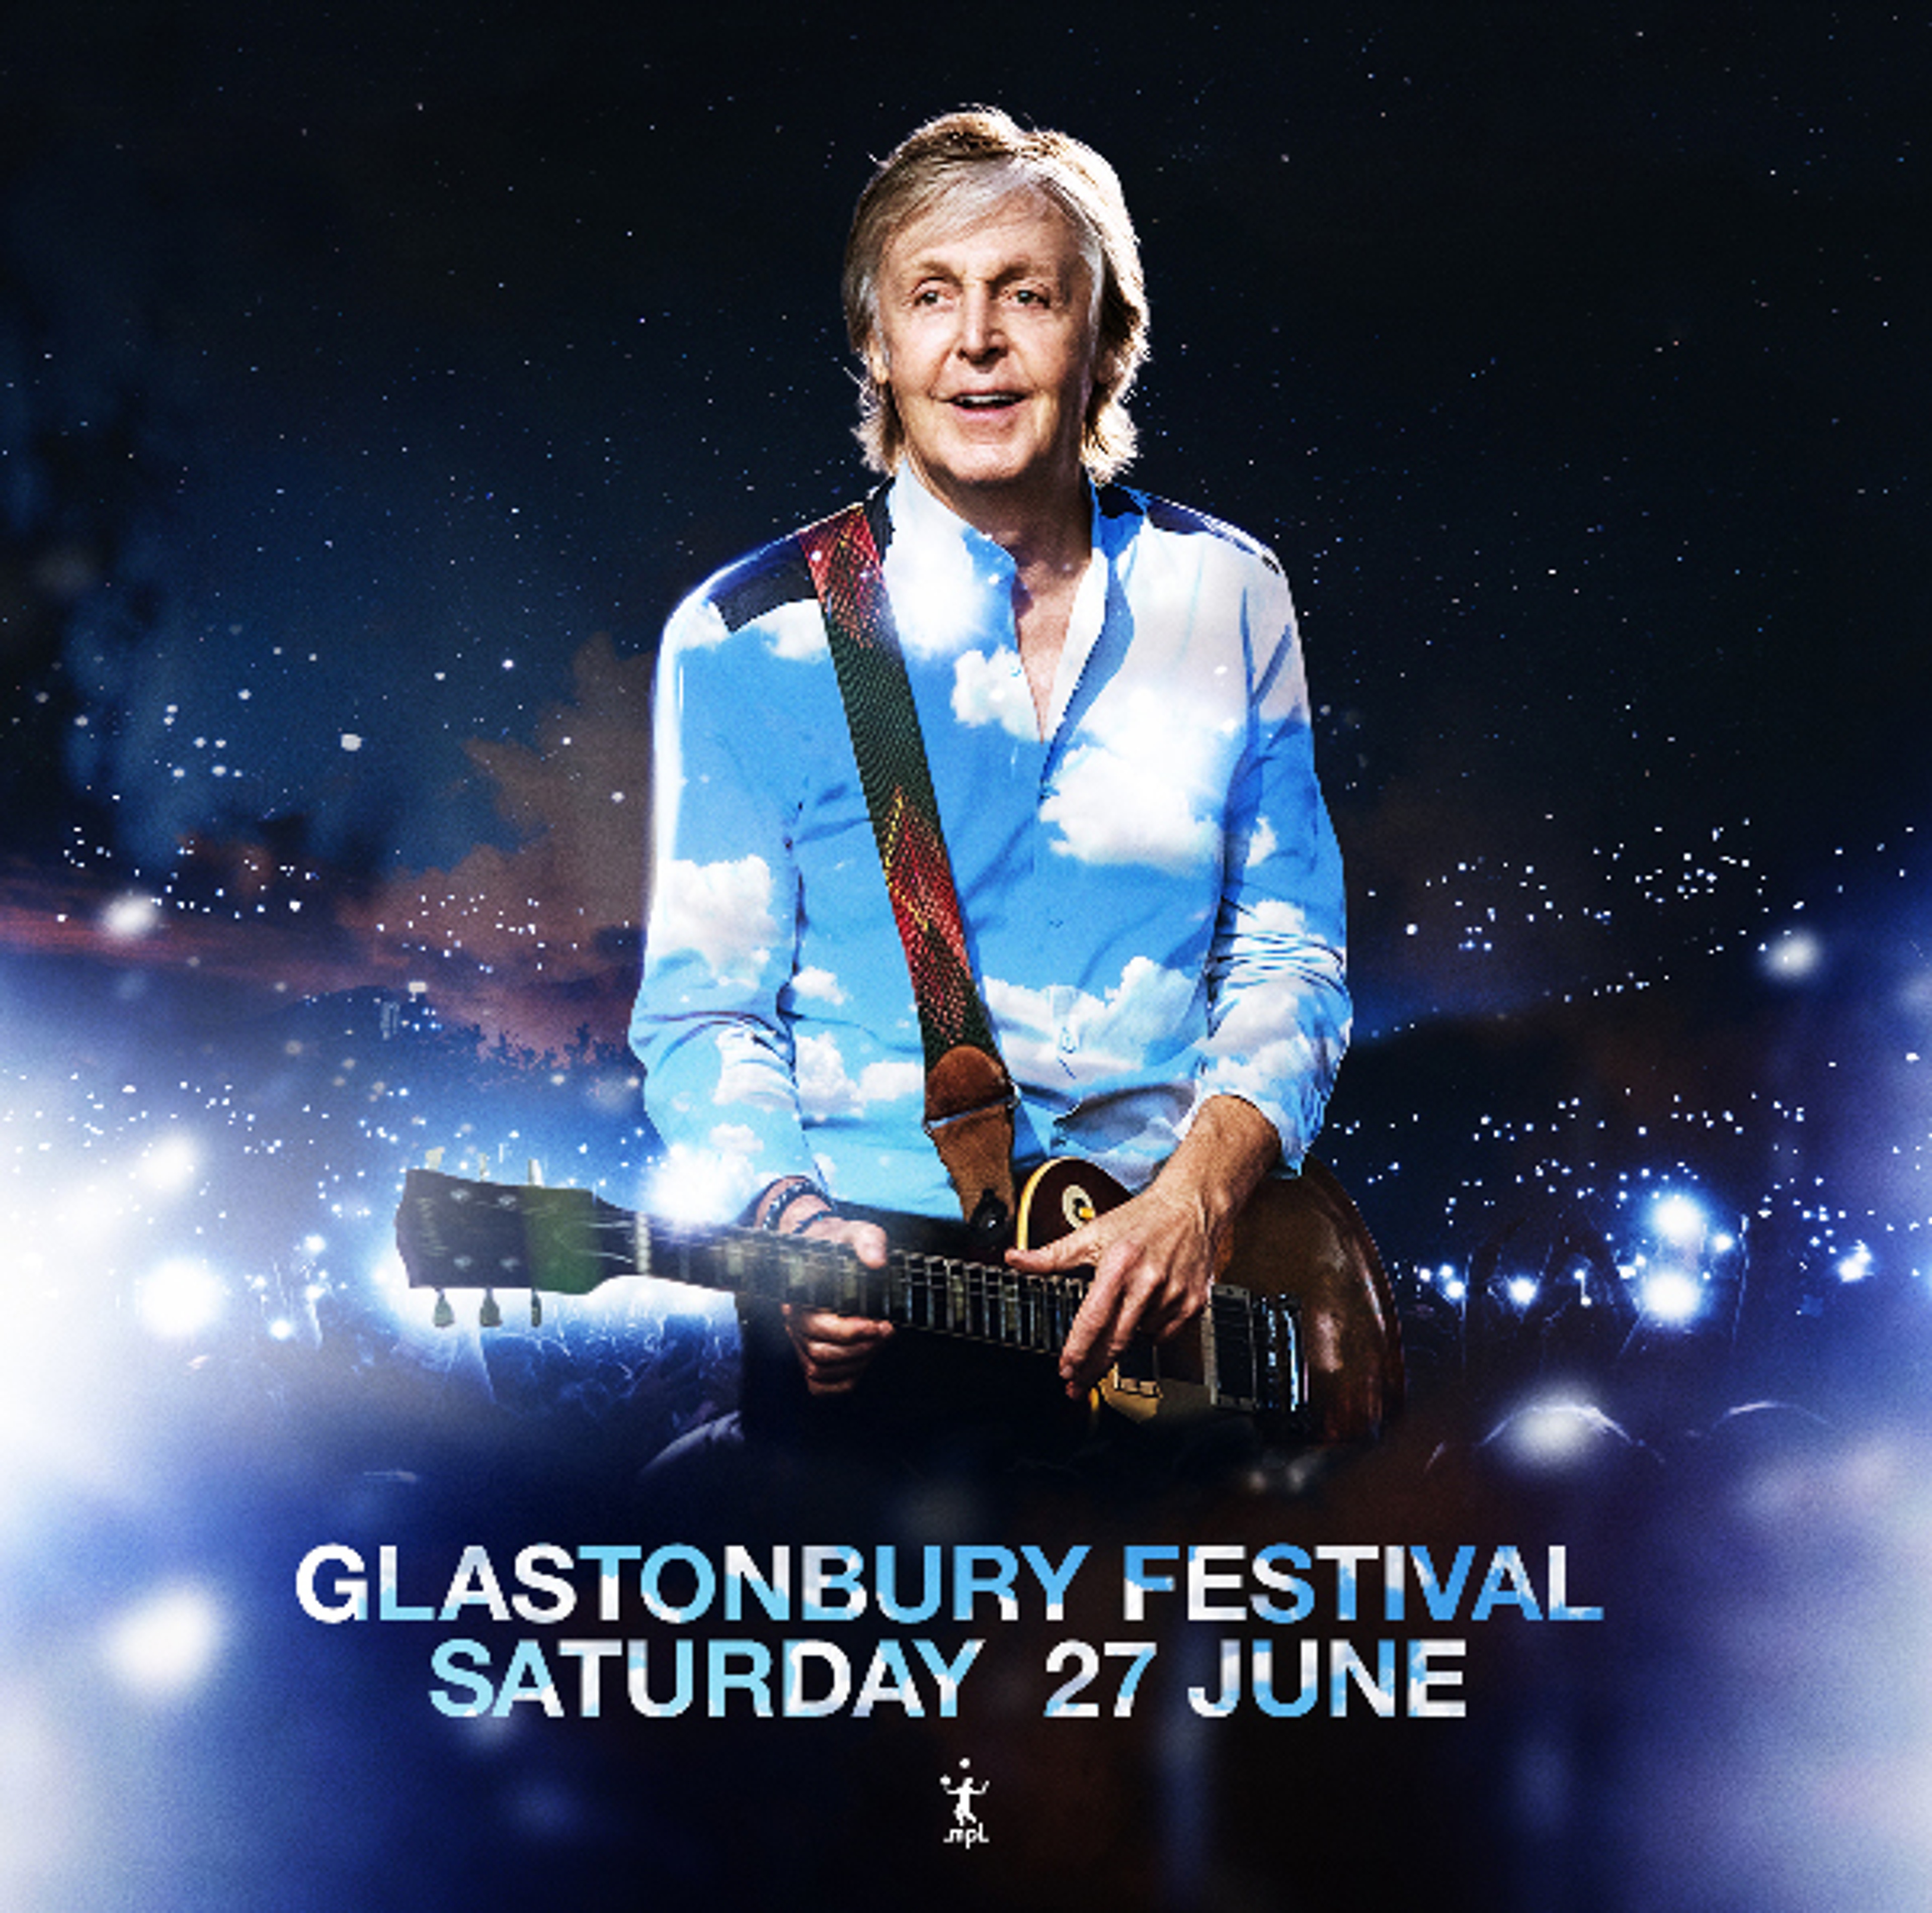 Photo of Paul McCartney playing guitar used for promotion of Glastonbury 2020